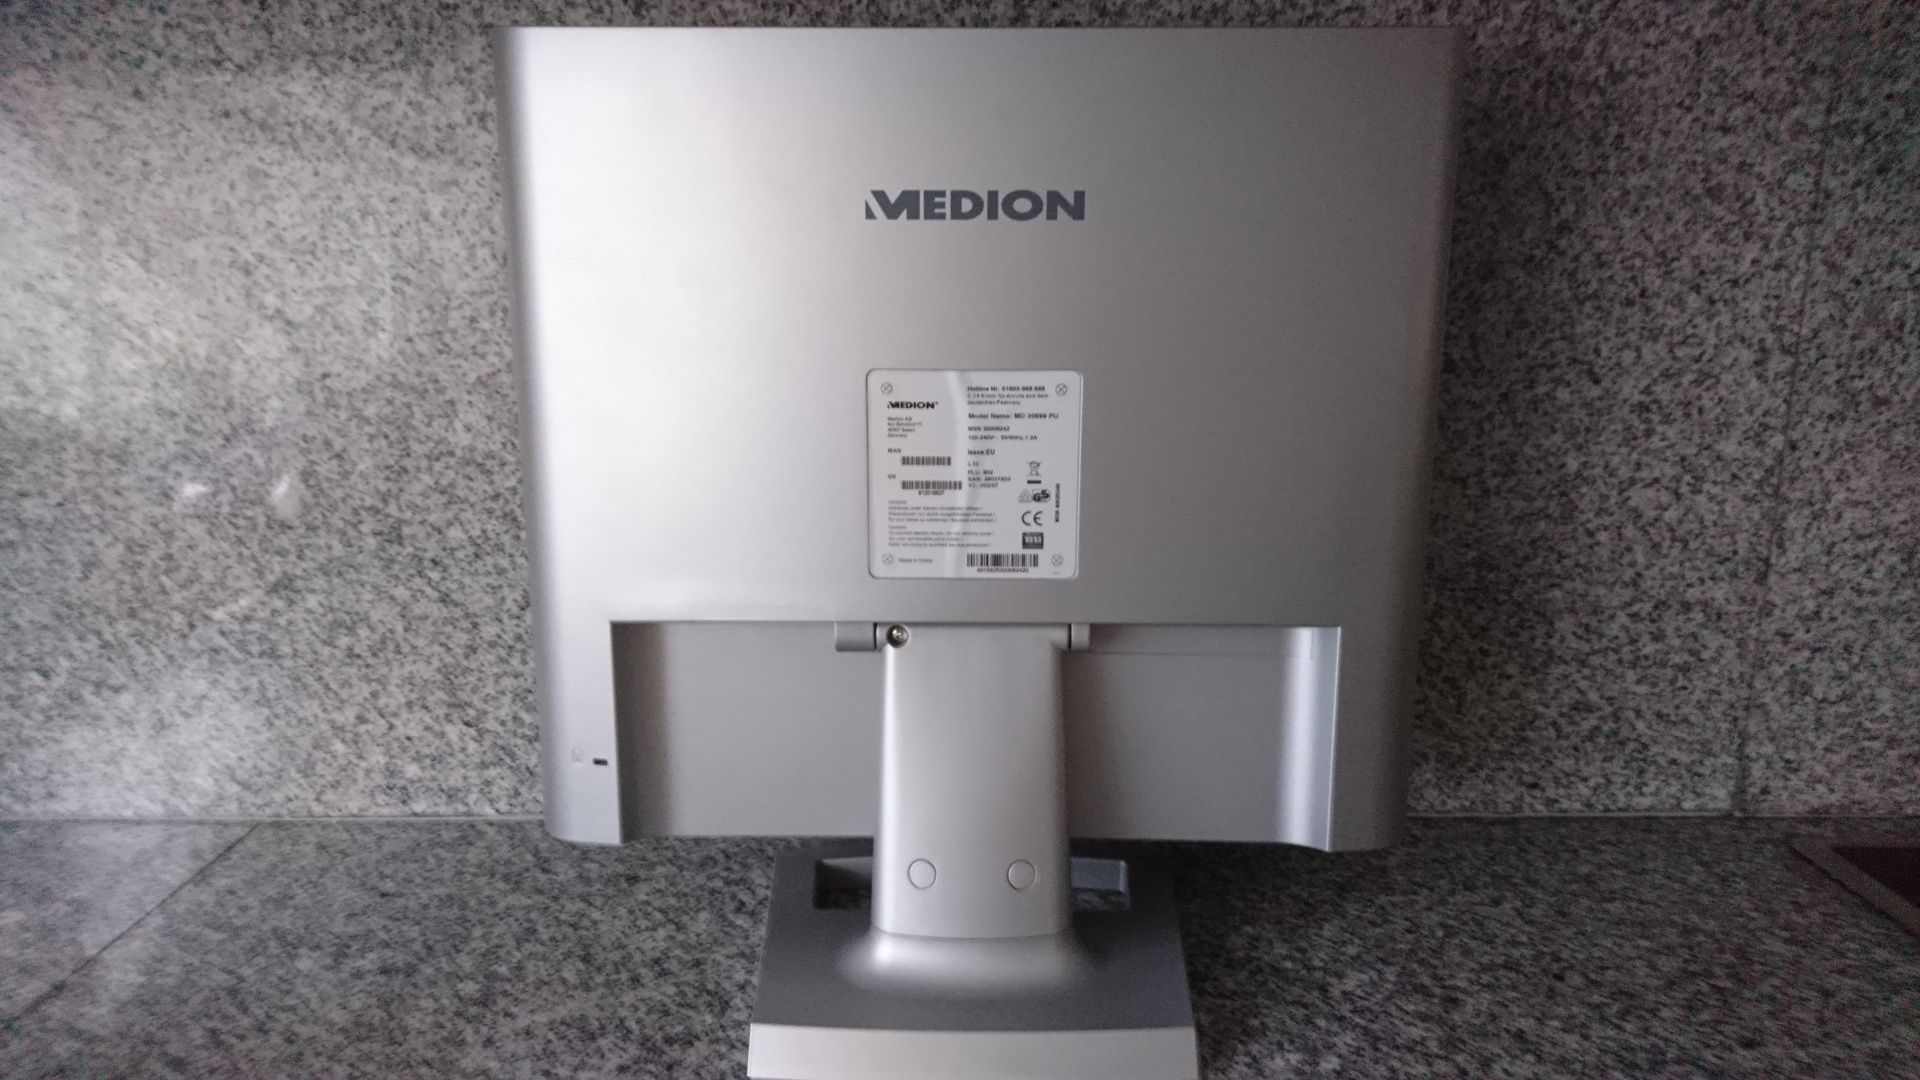 Monitor Medion-model MD 30699 PU